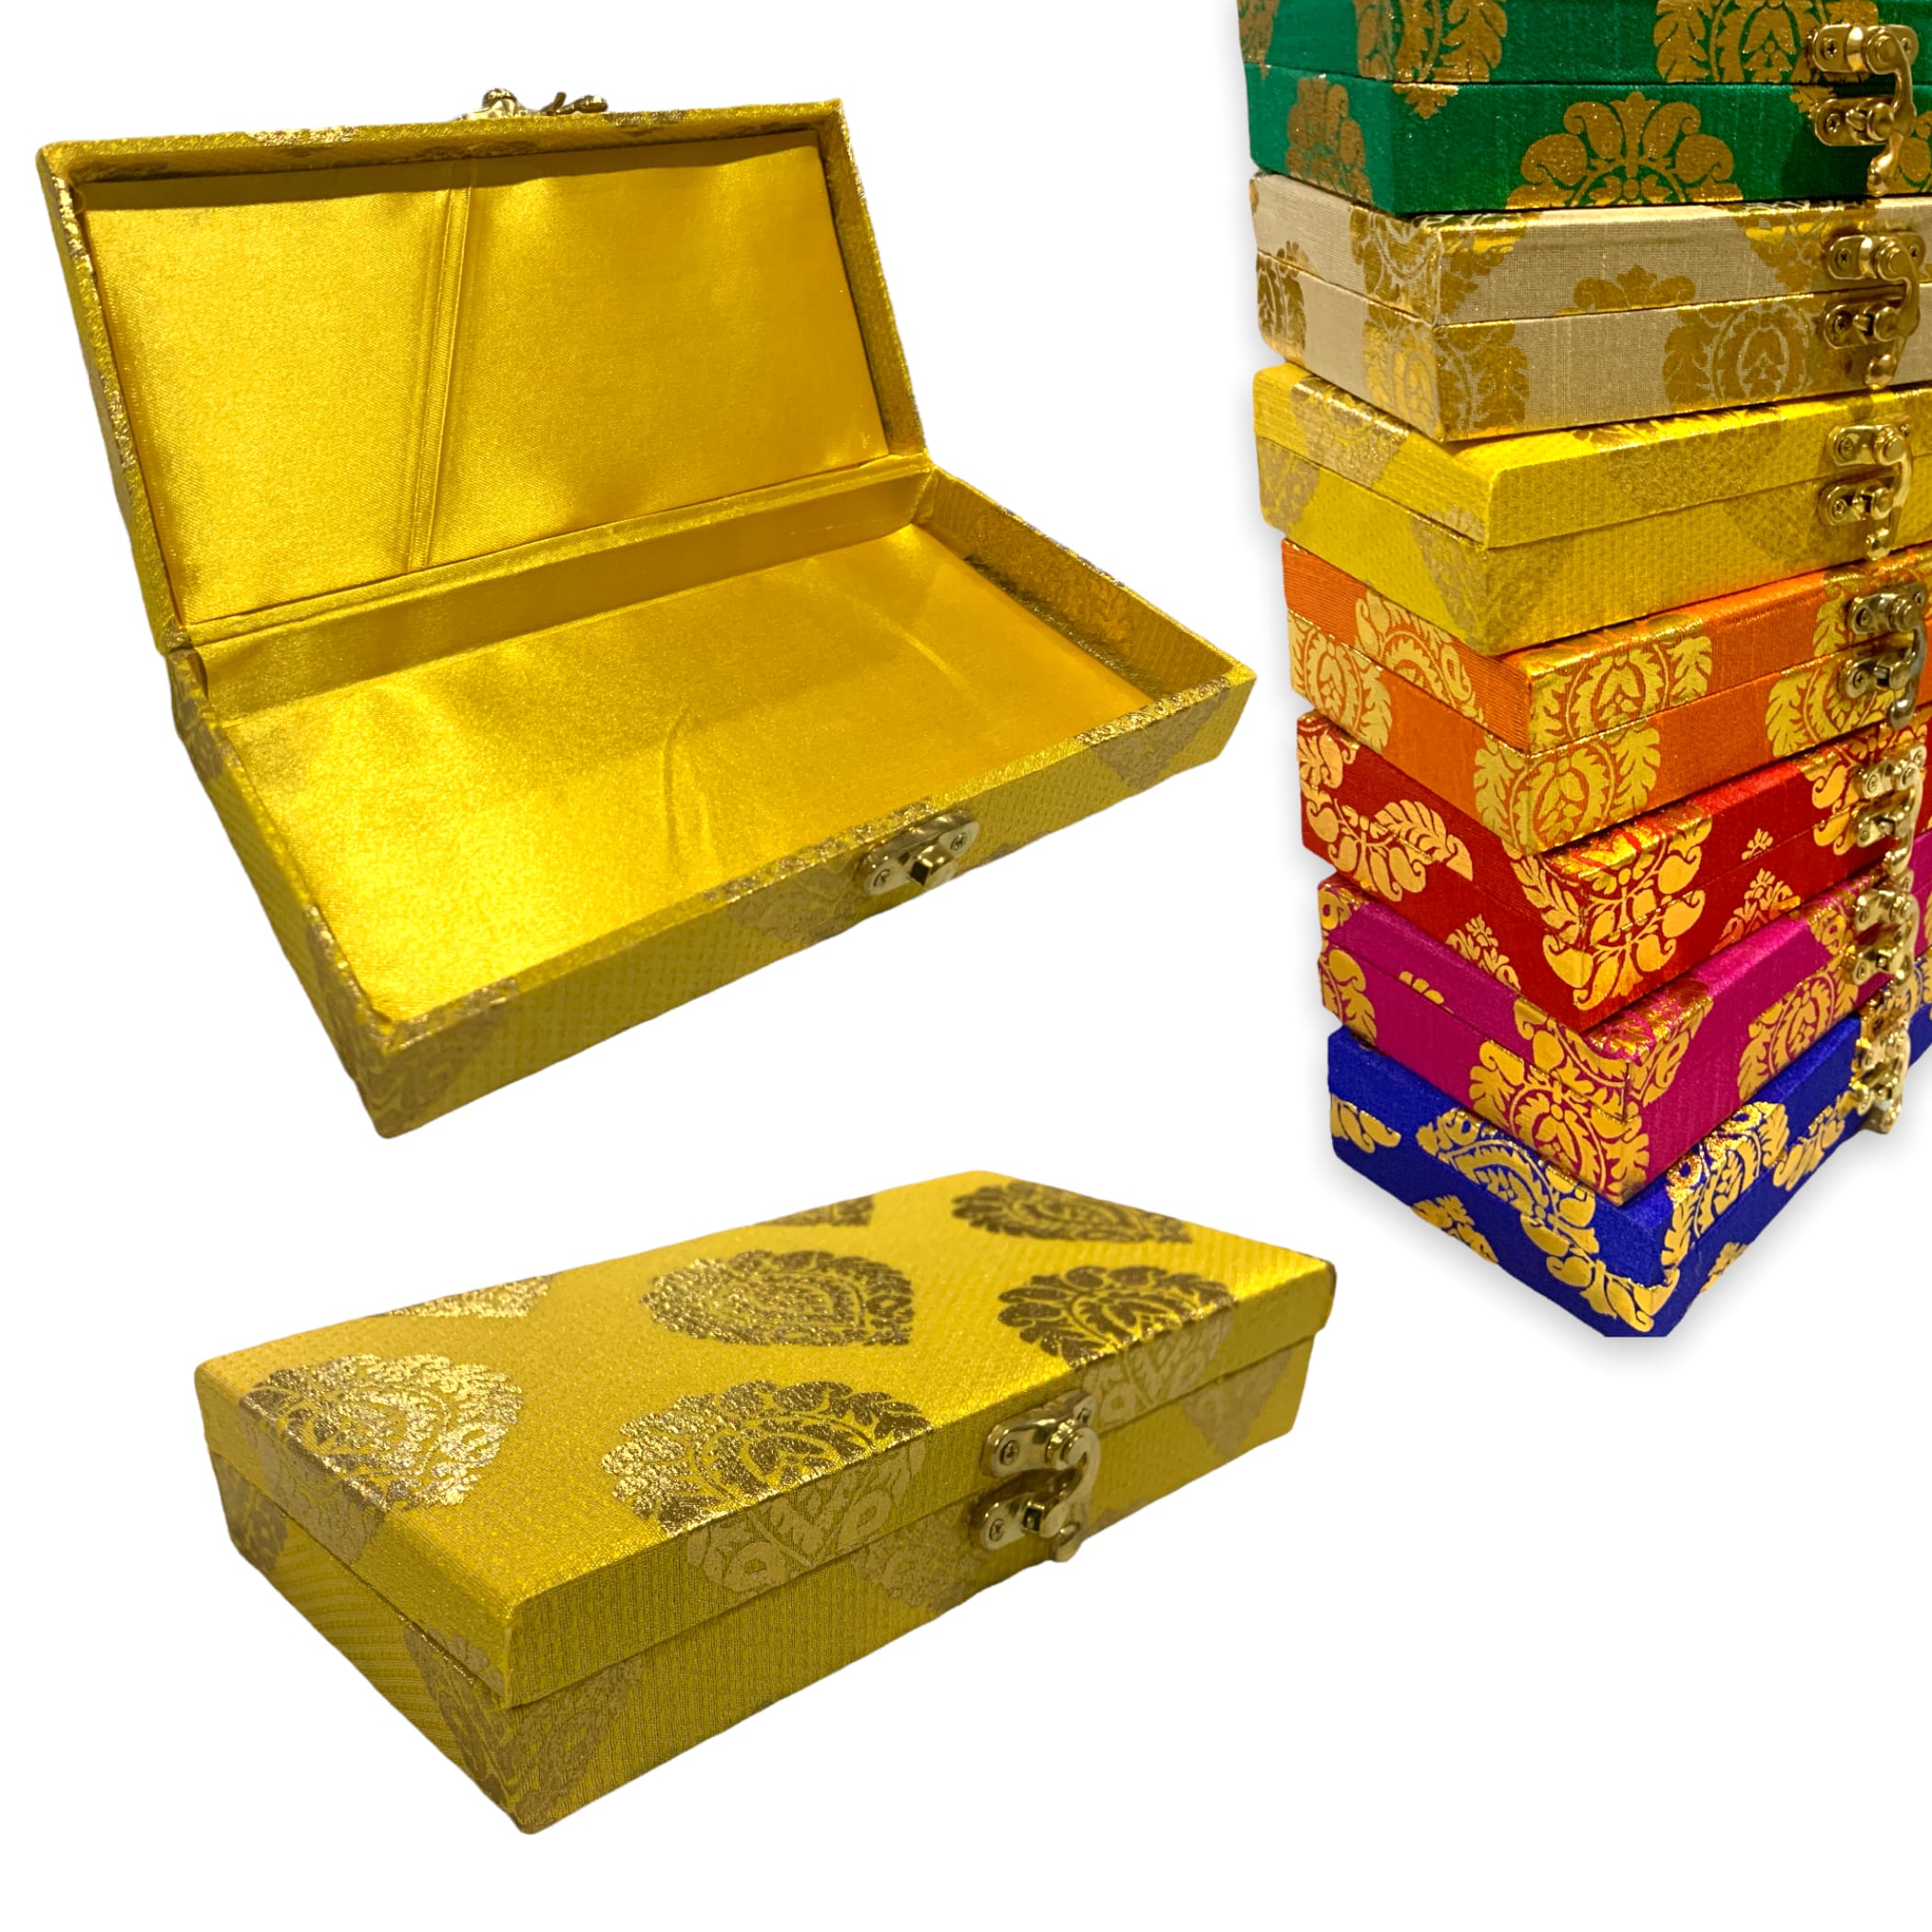 4 pcs brocade jewelry travel organizer box gift boxes favor